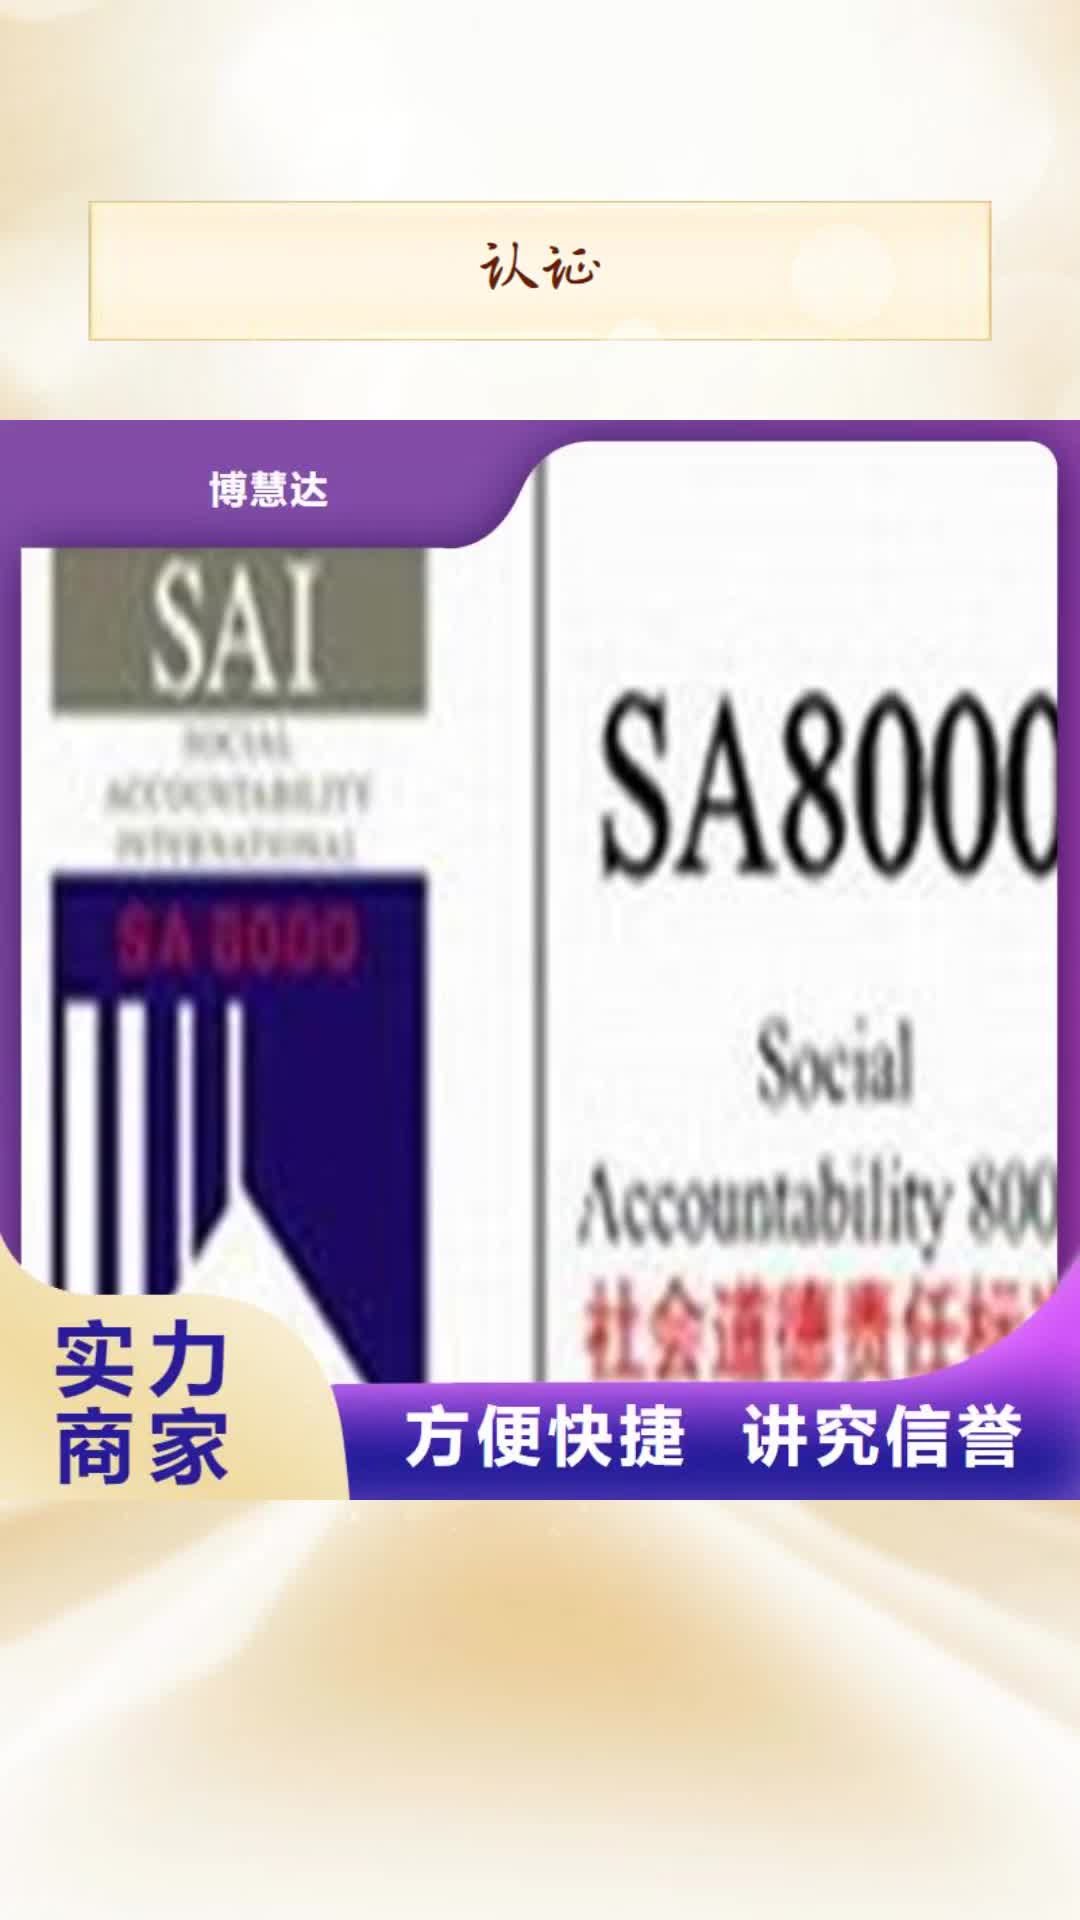 【扬州 认证 ISO9000认证品质优】